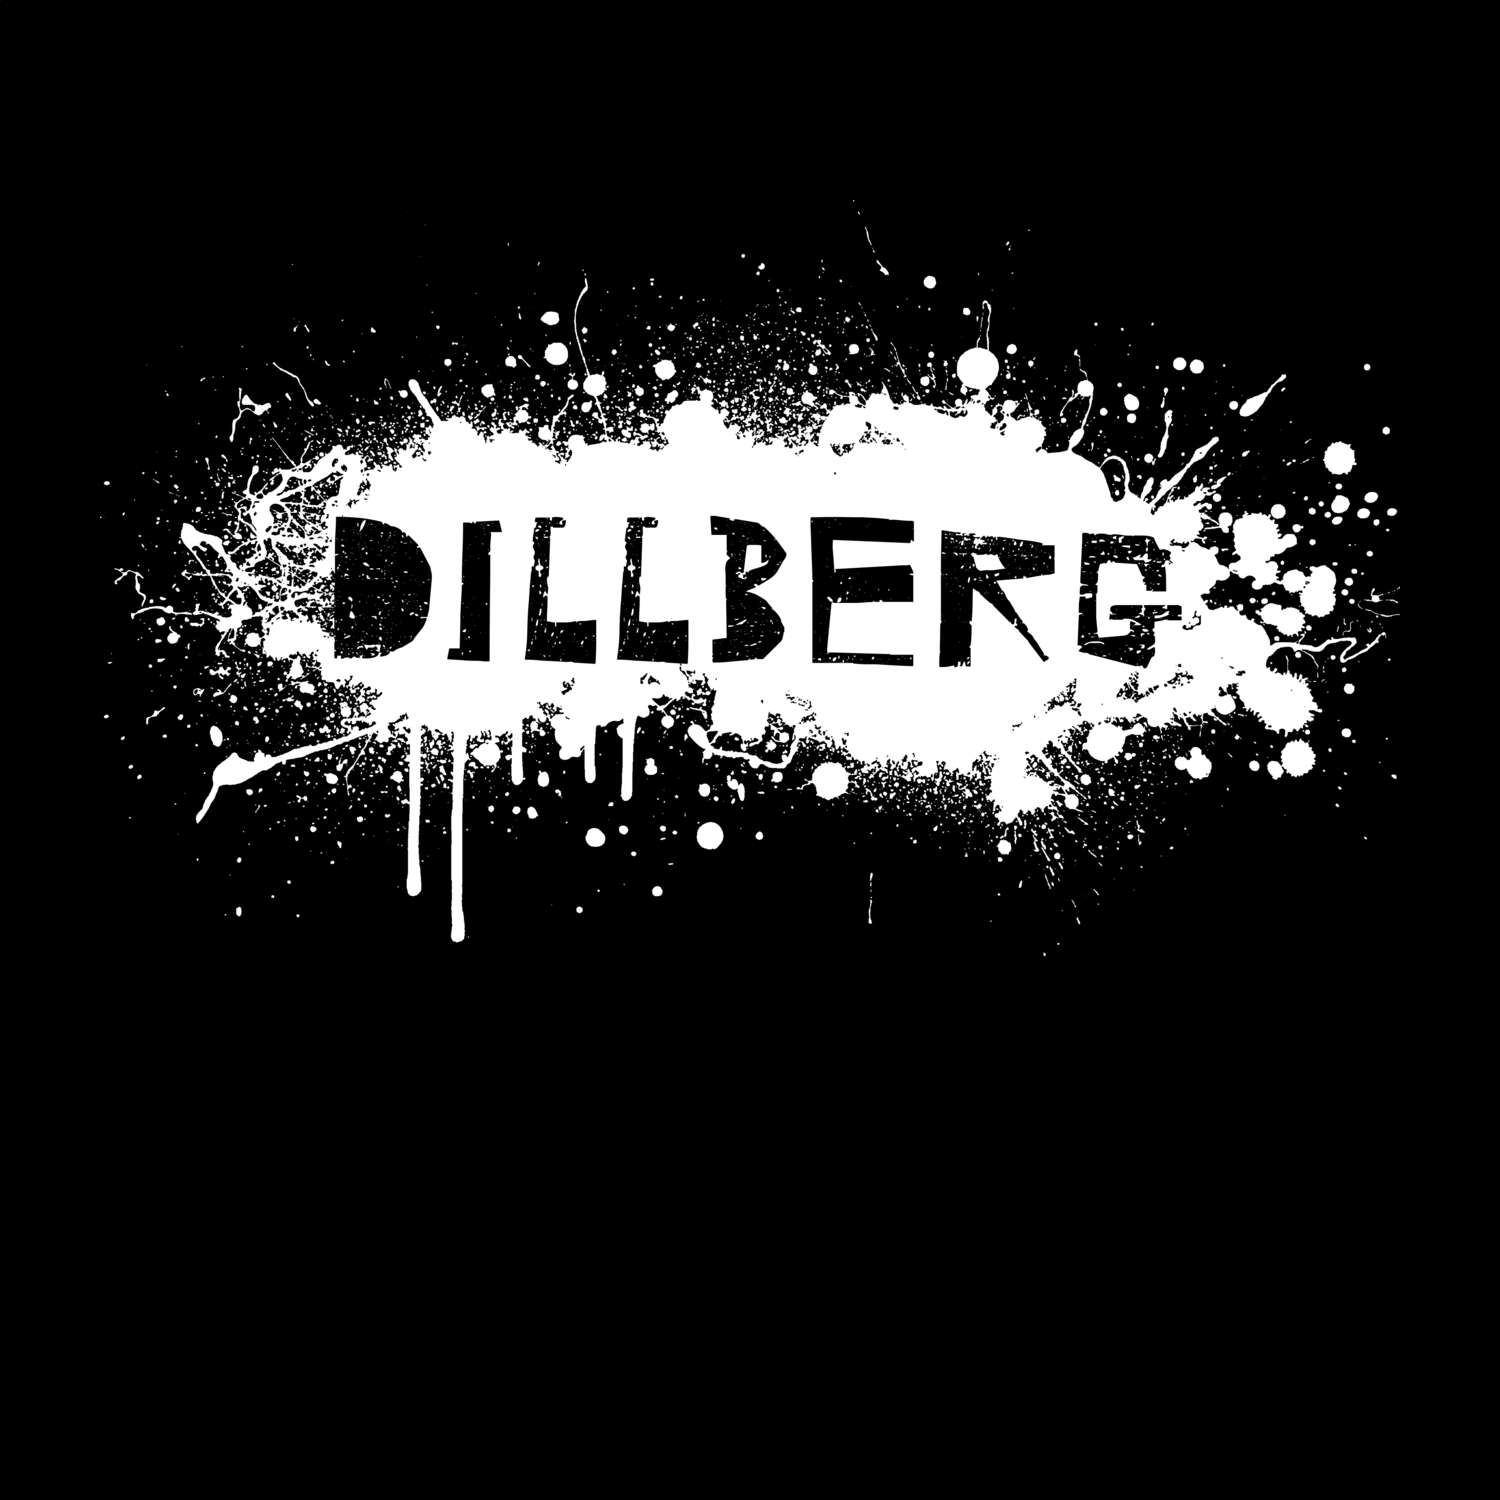 Dillberg T-Shirt »Paint Splash Punk«